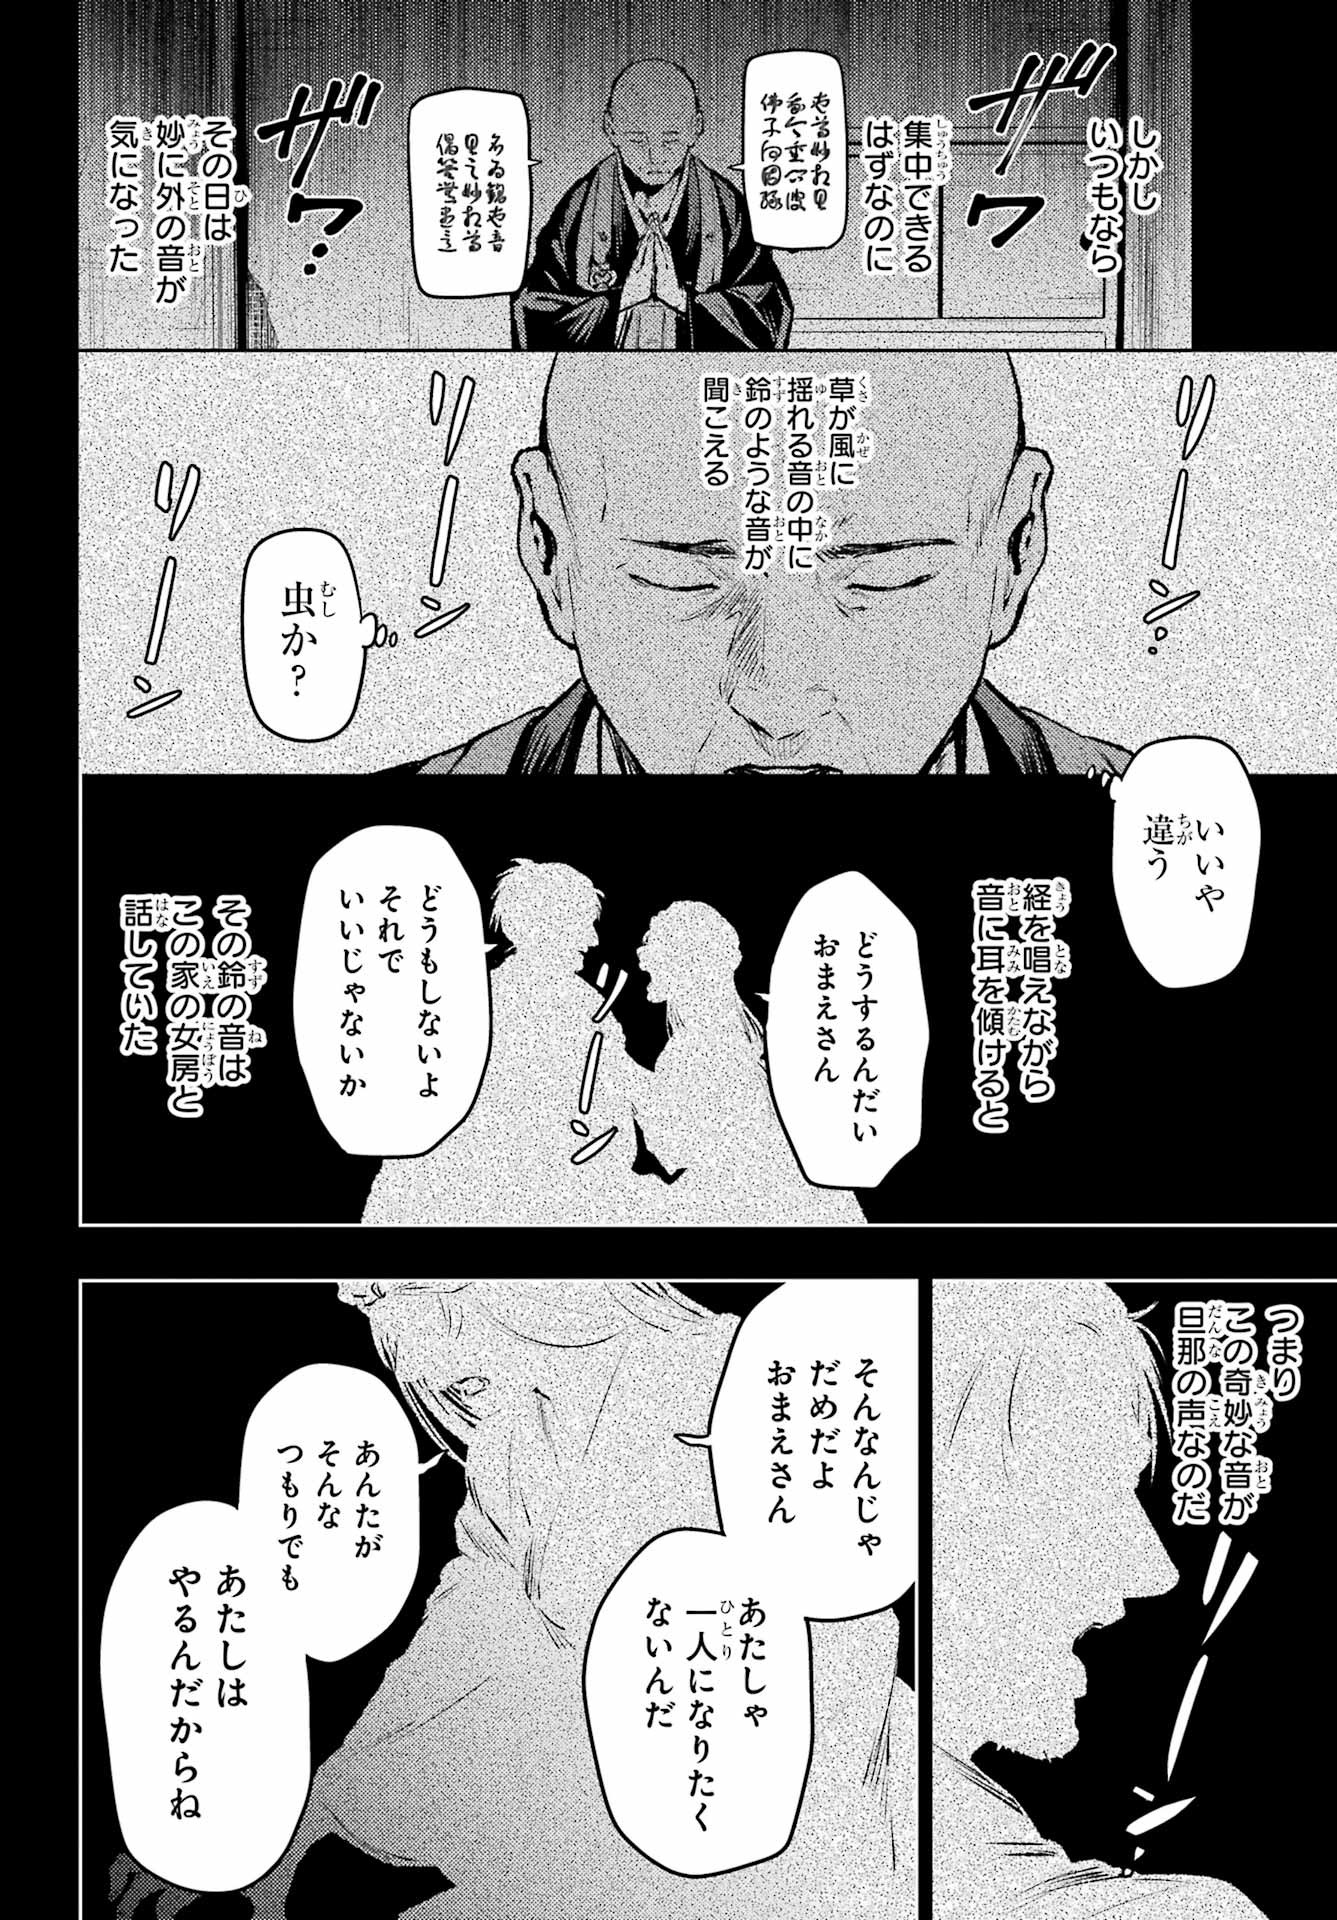 Kusuriya no Hitorigoto - Chapter 59-2 - Page 3